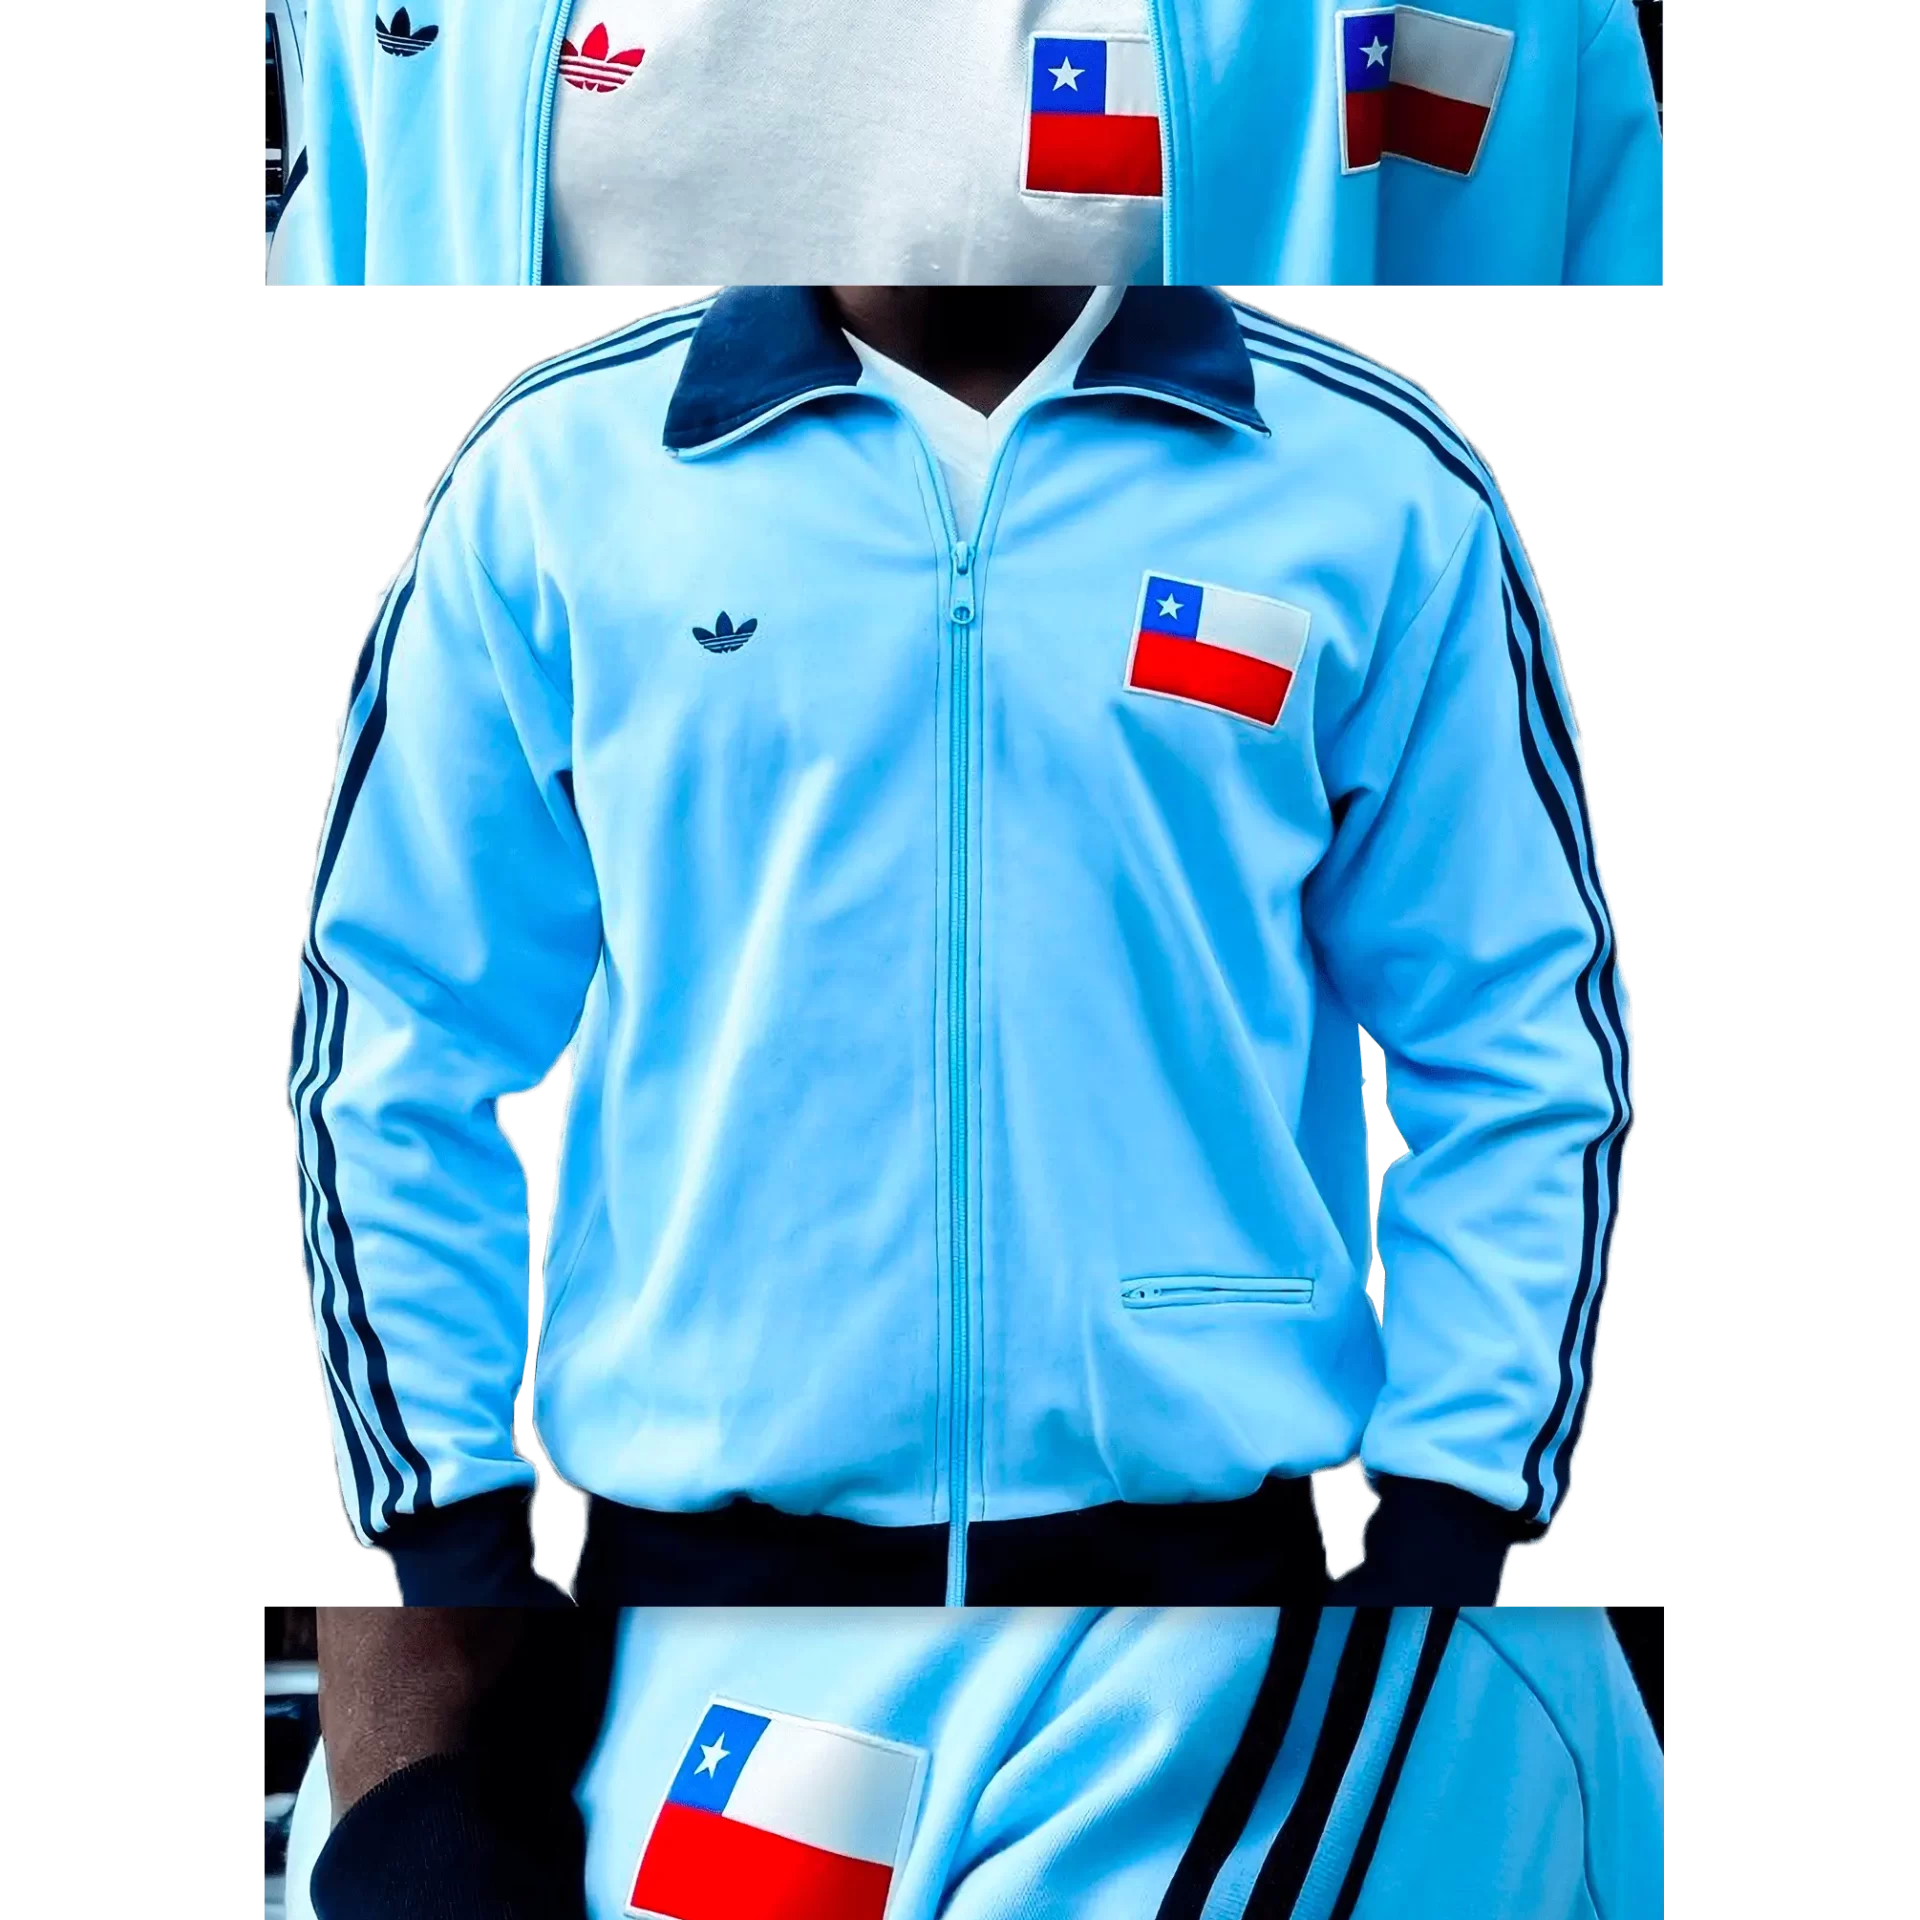 Men's 2003 Chile '62 Fouilloux TT by Adidas Originals: Fascinating (EnLawded.com file #lmchk80340ip2y124789kg9st)